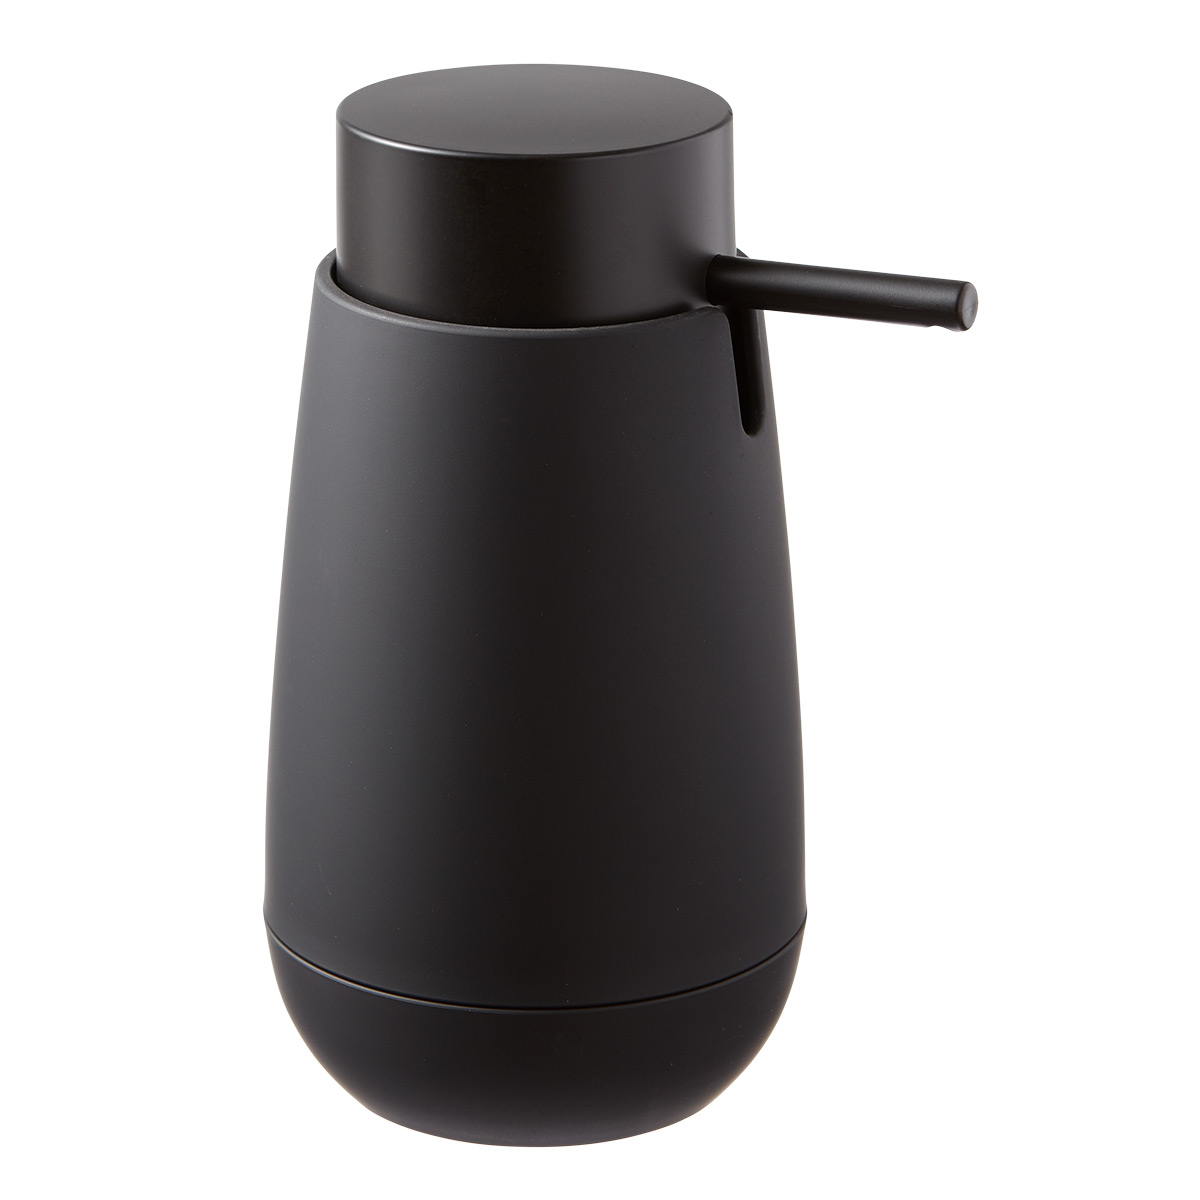  CAAS Ceramic Black Soap Dispenser : Soap Dispenser  Bathroom,Girl Lotion Dispenser with Pump,Refillable Liquid Premium Kitchen Soap  Dispenser (Black) : Home & Kitchen